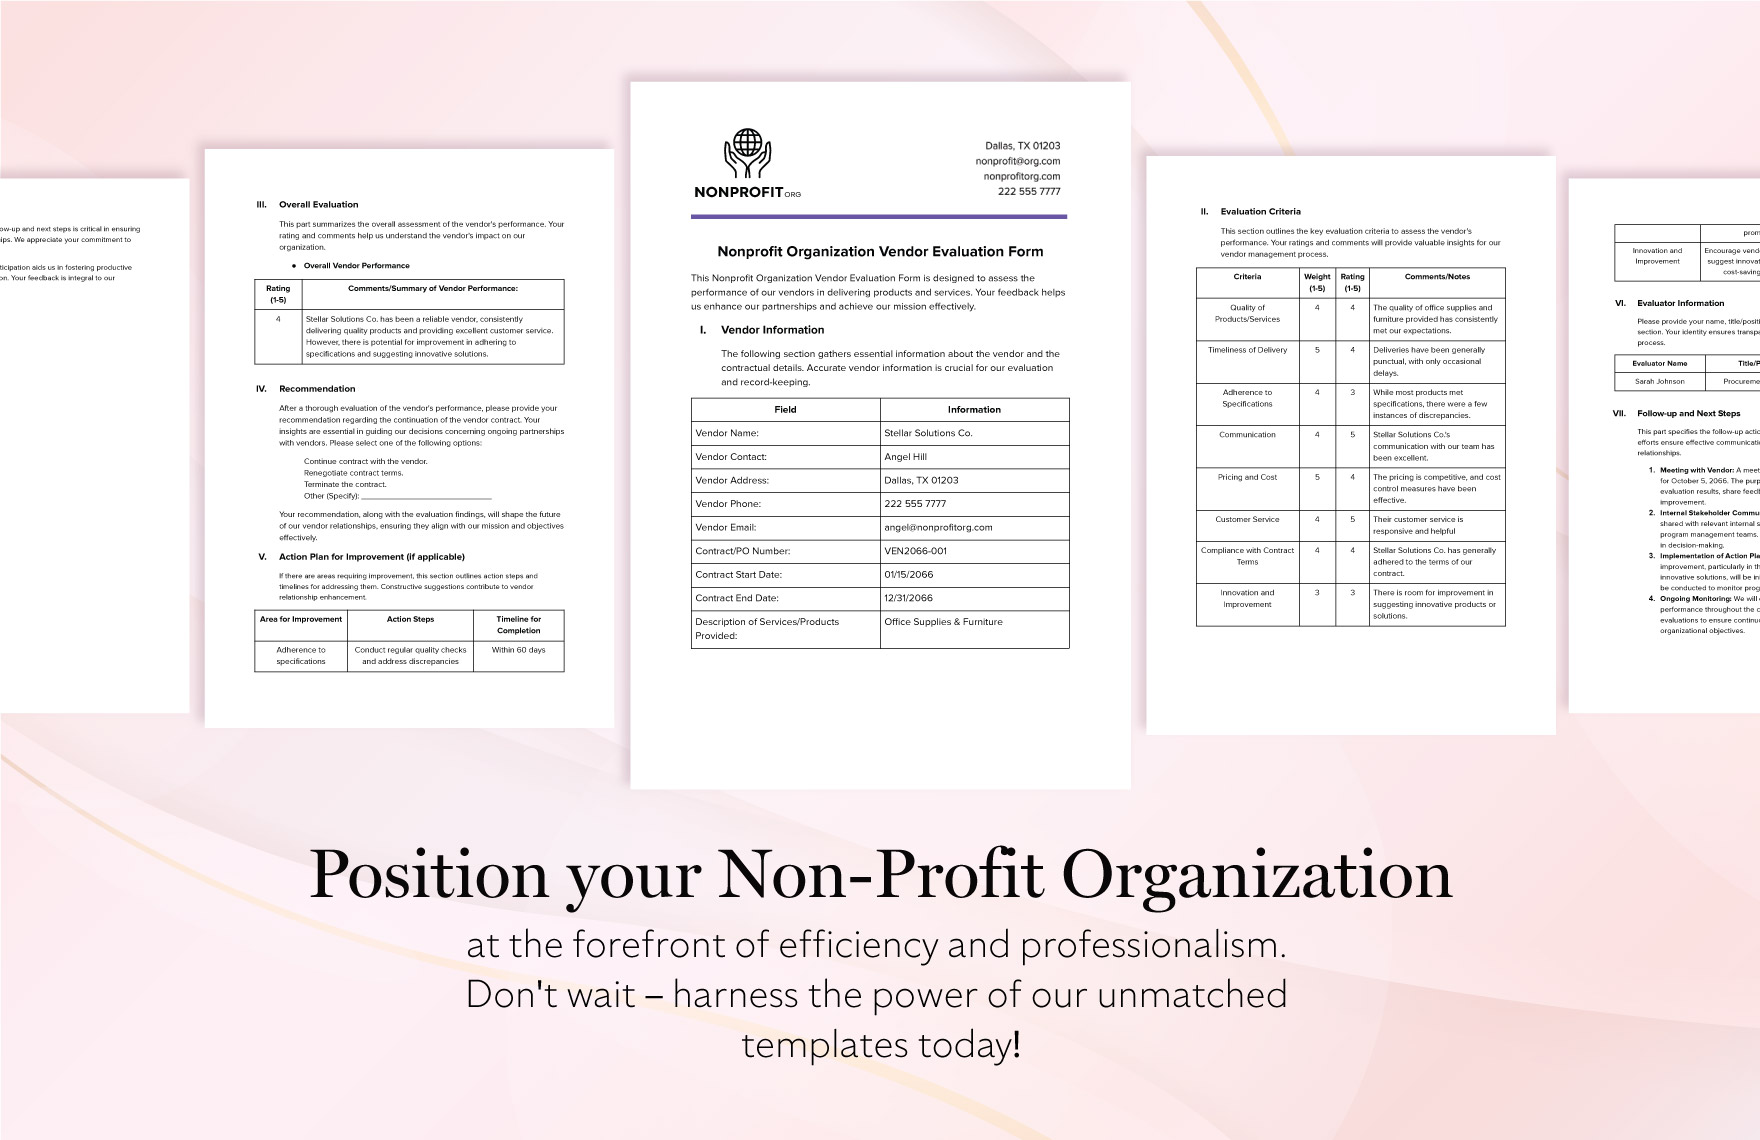 Nonprofit Organization Vendor Evaluation Form Template